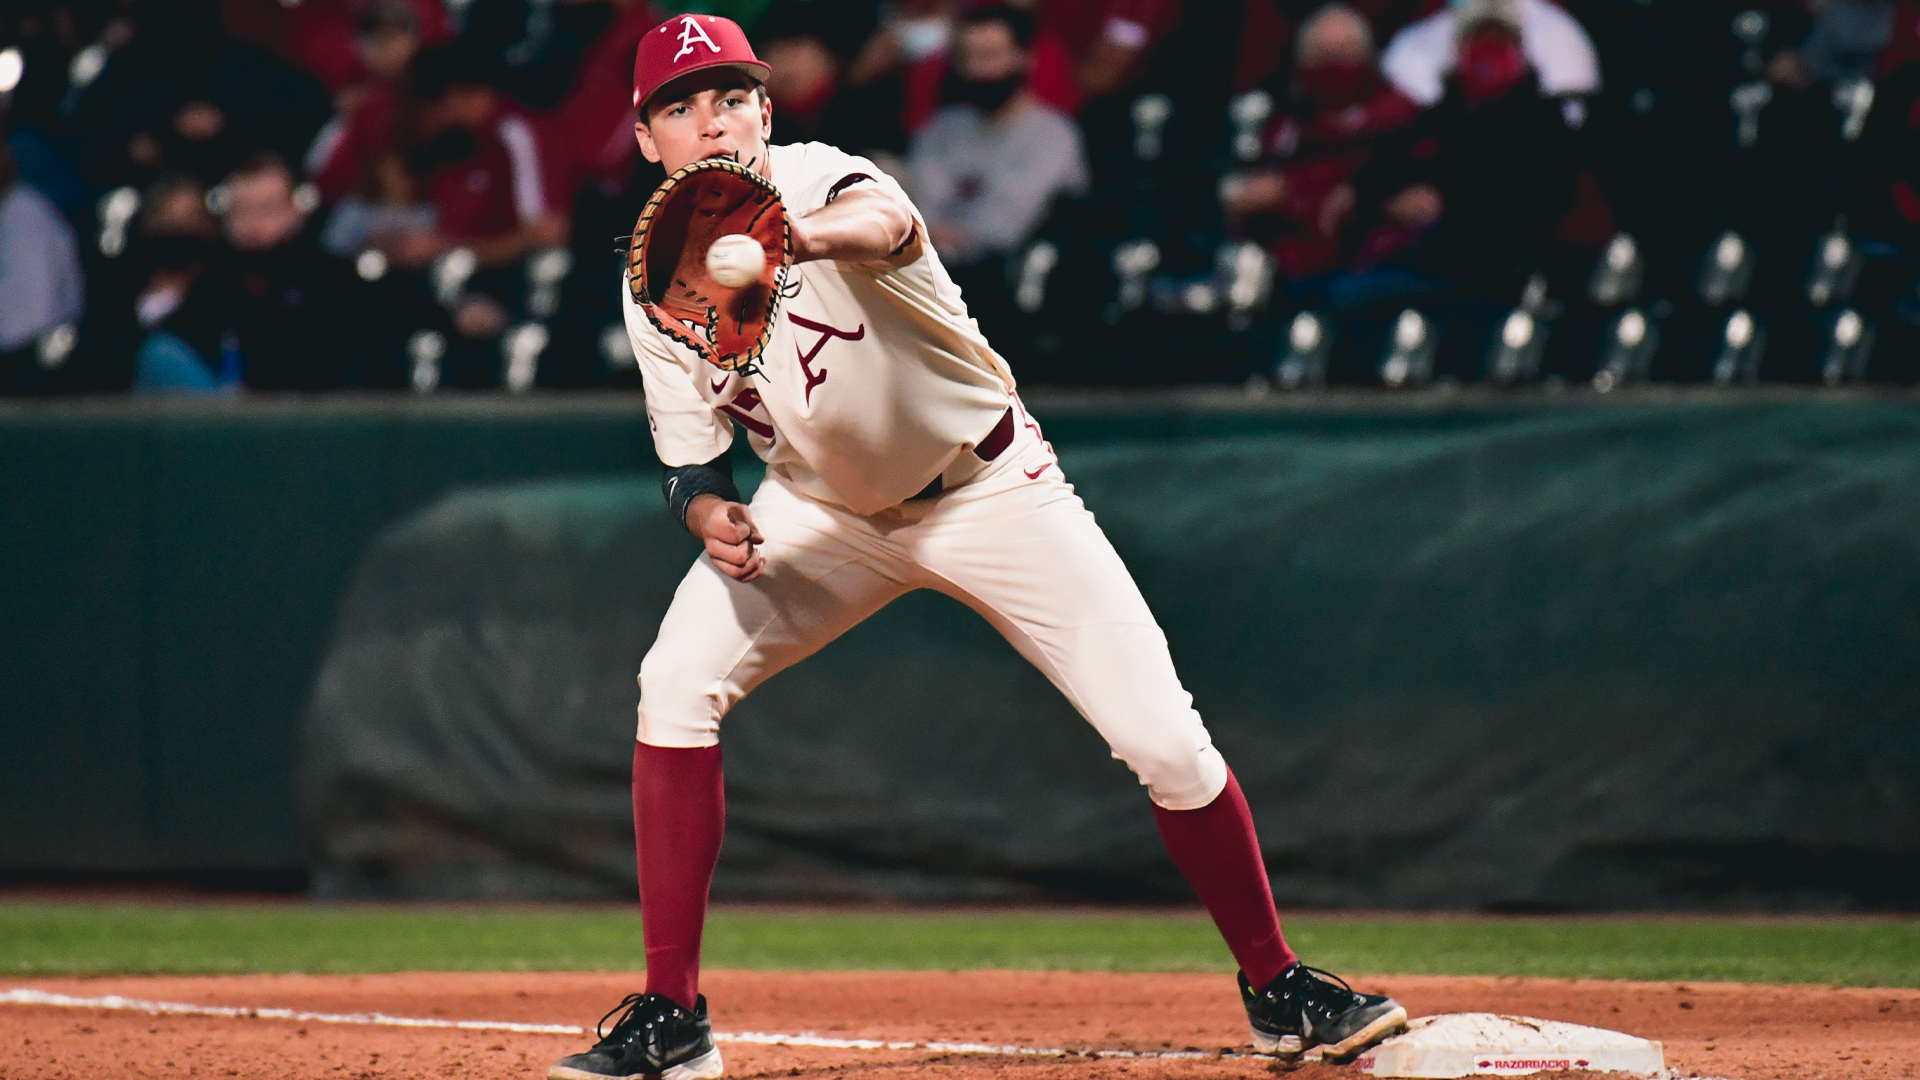 Arkansas baseball: 5 things to know about first baseman Brady Slavens